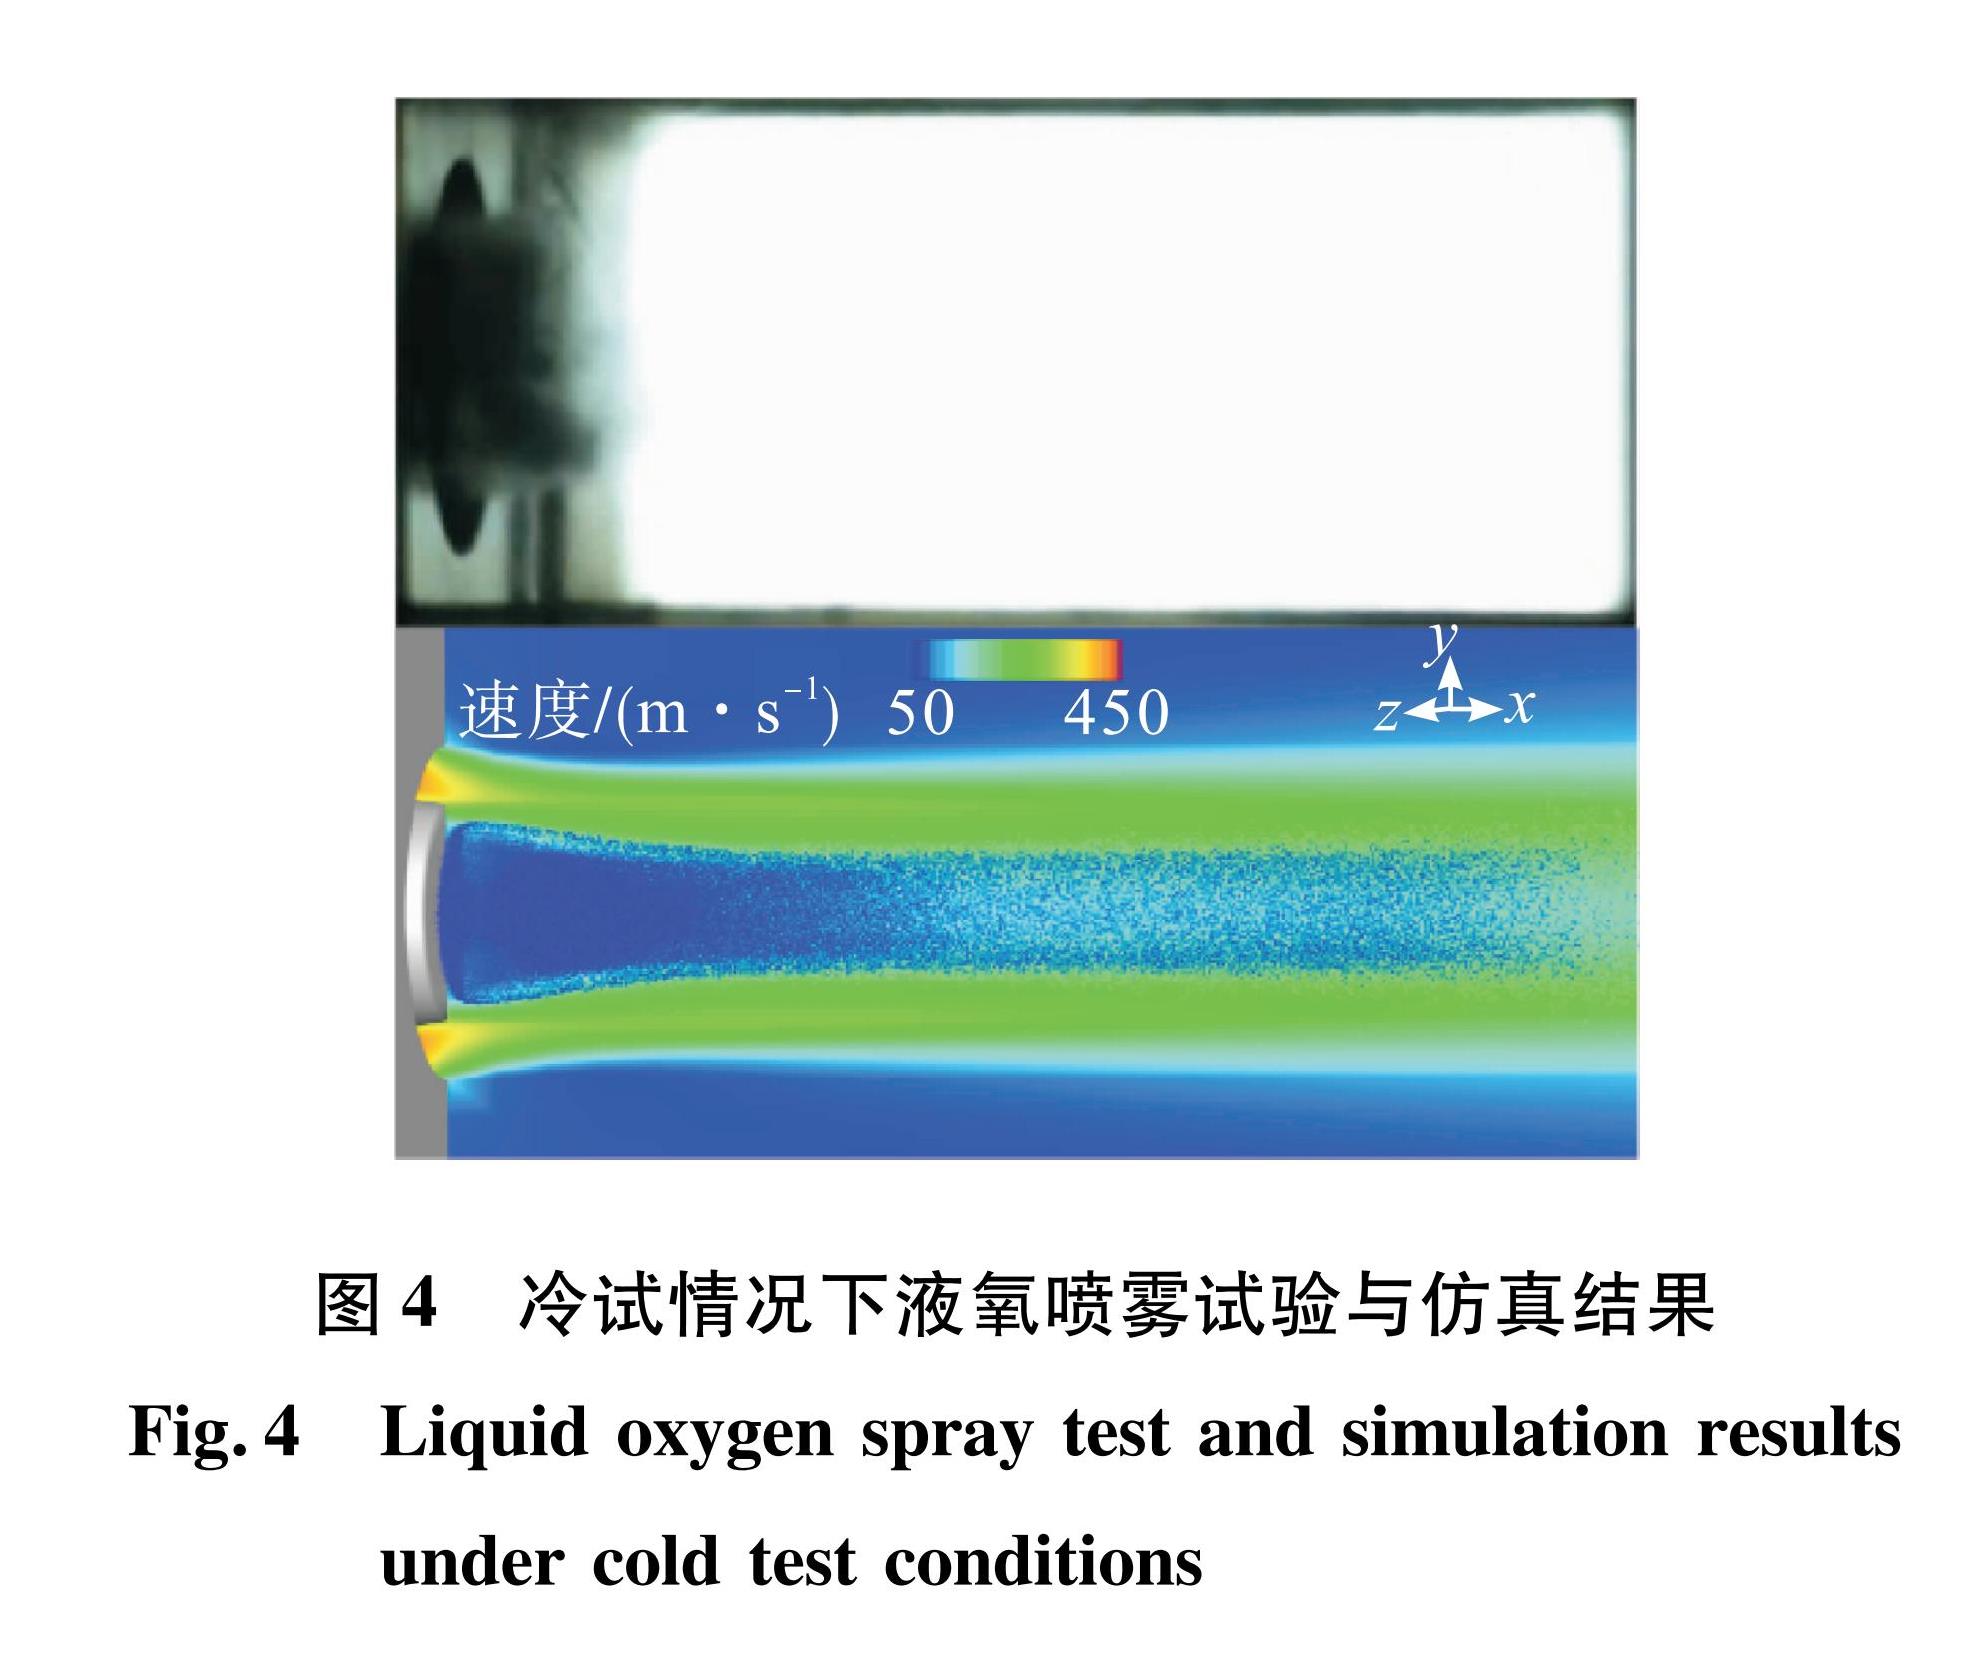 图4 冷试情况下液氧喷雾试验与仿真结果<br/>Fig.4 Liquid oxygen spray test and simulation results under cold test conditions